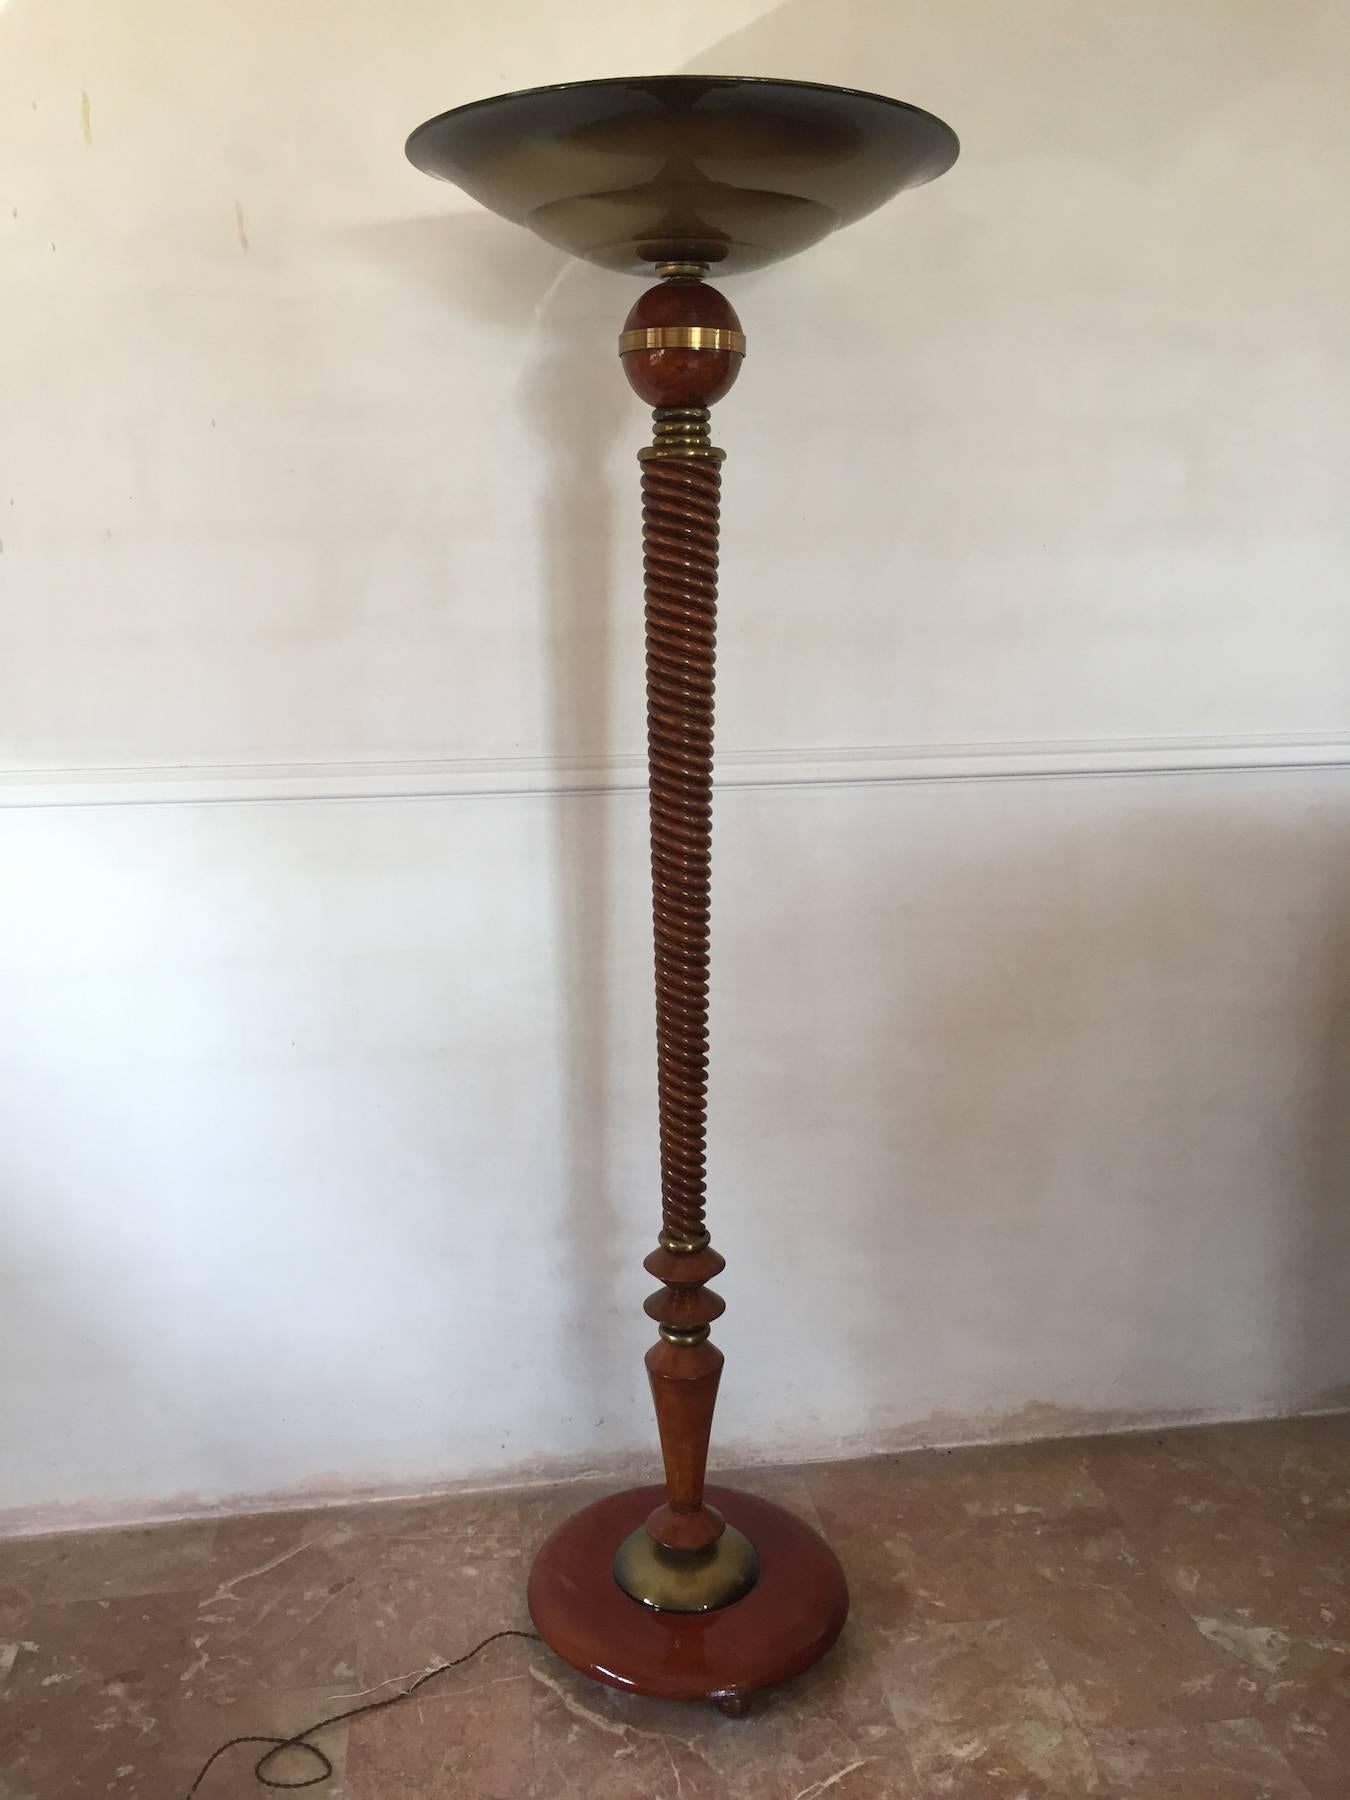 Unique French Art Deco standard lamp, beautiful wood shaft design, superb brass decorations, circular base.